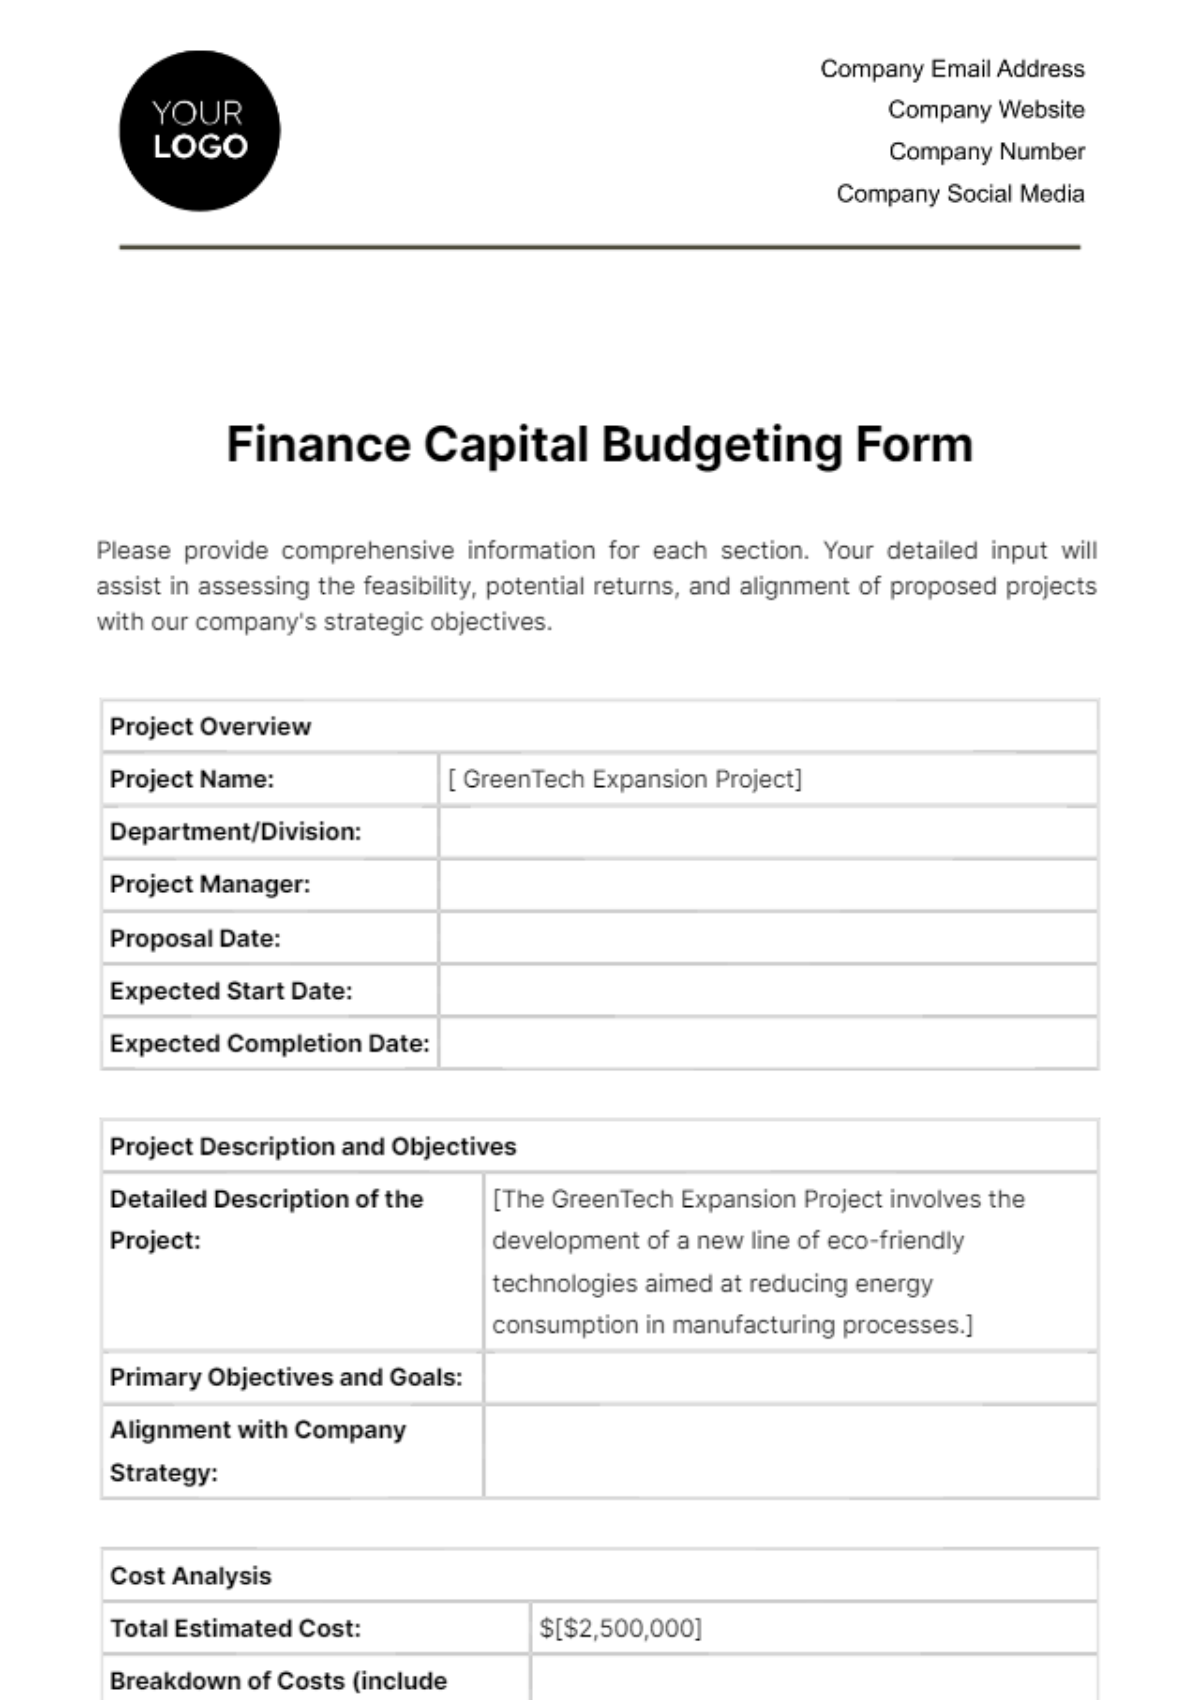 Free Finance Capital Budgeting Form Template